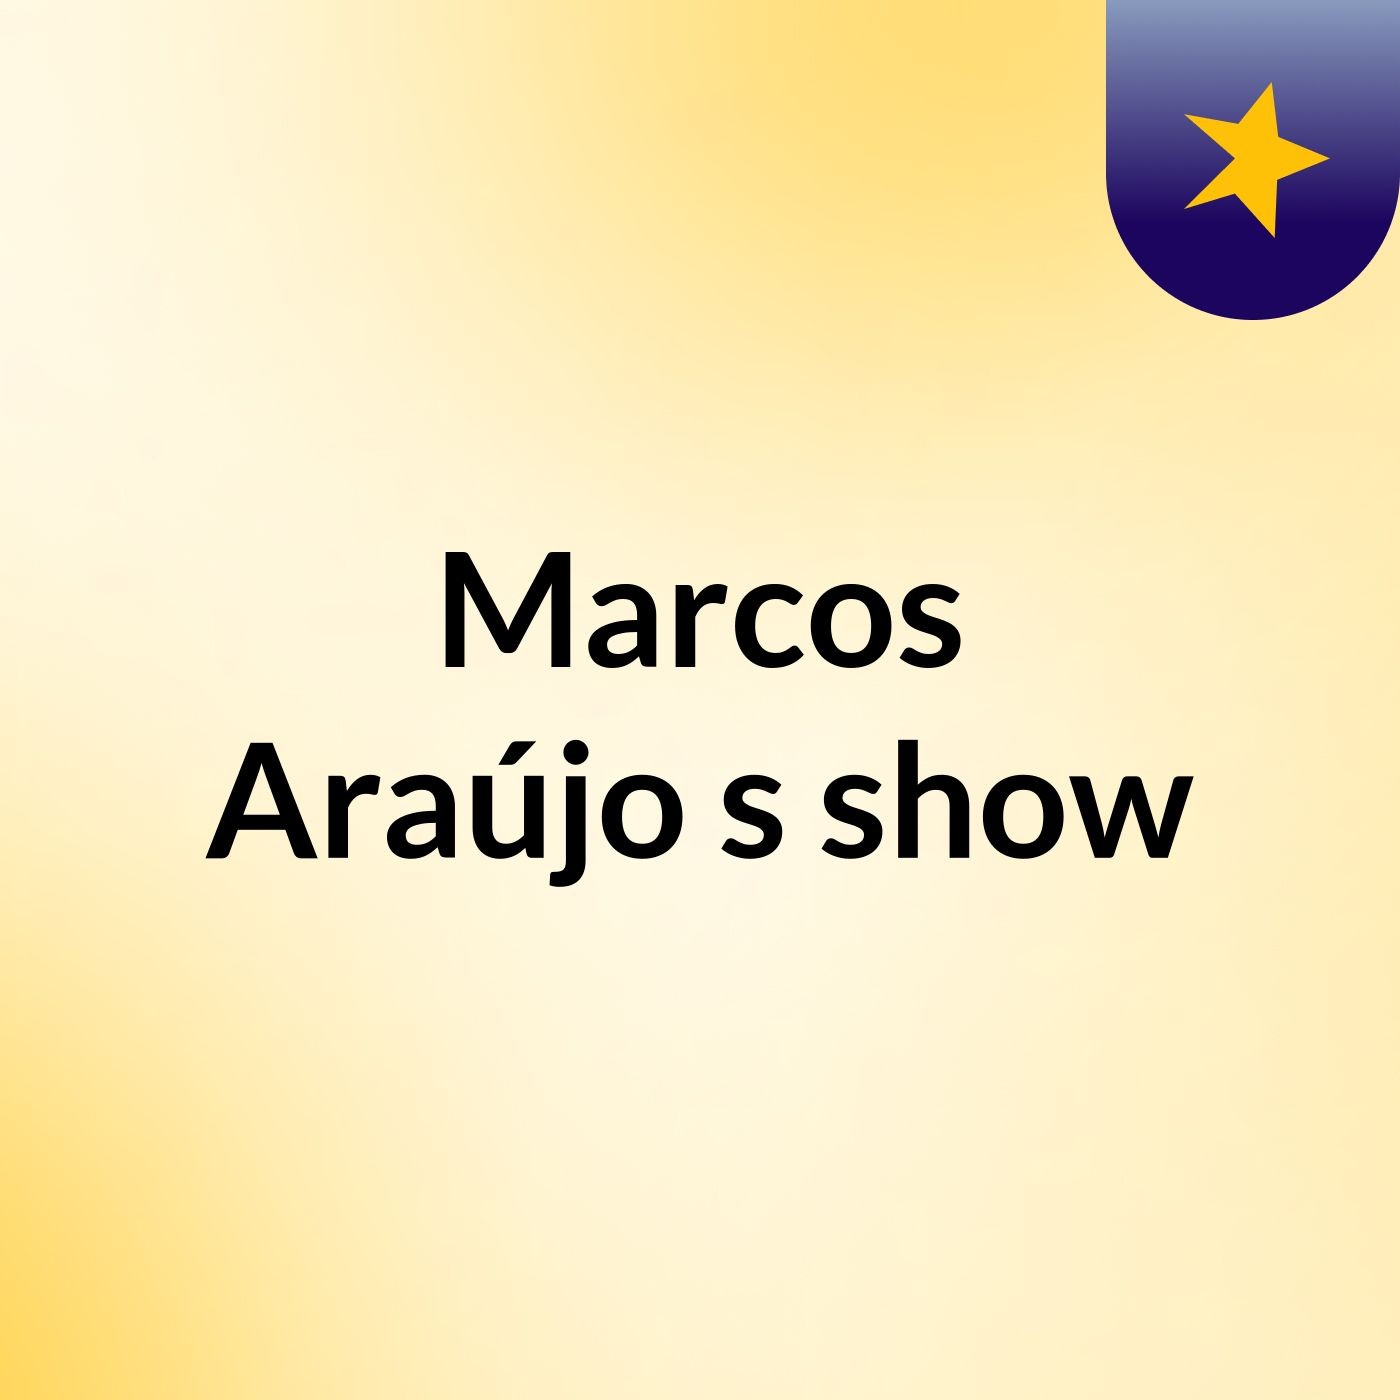 Marcos Araújo's show